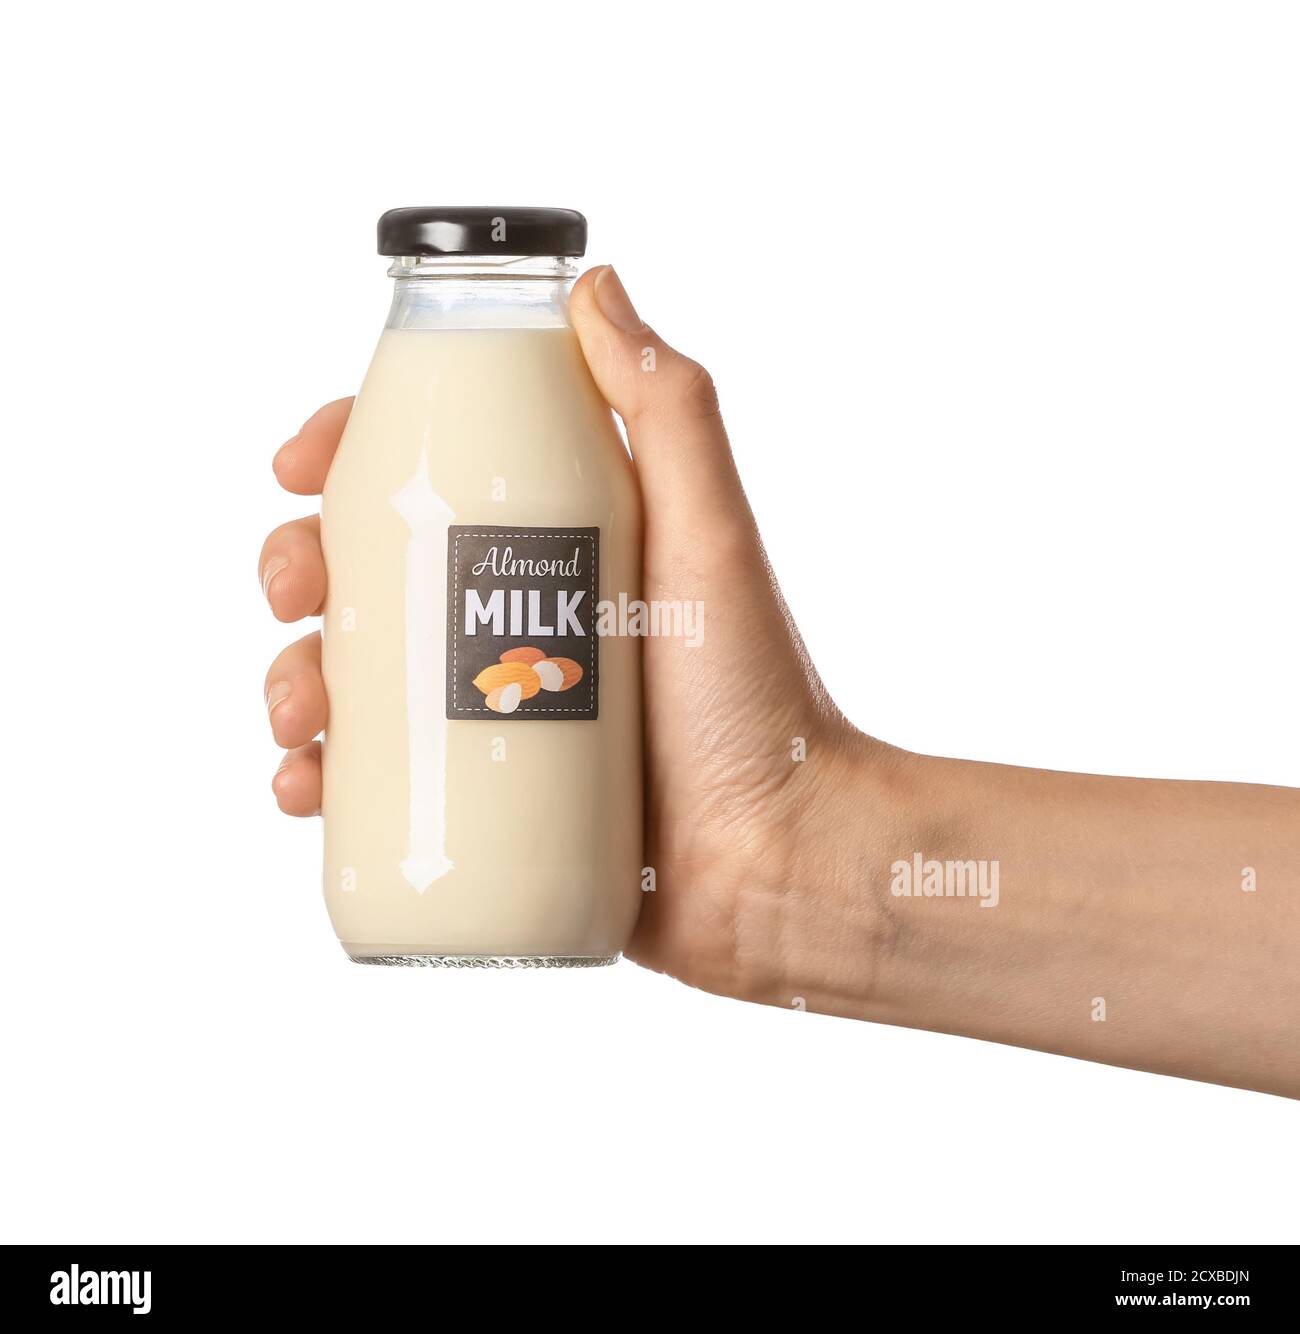 https://c8.alamy.com/comp/2CXBDJN/female-hand-with-bottle-of-almond-milk-on-white-background-2CXBDJN.jpg